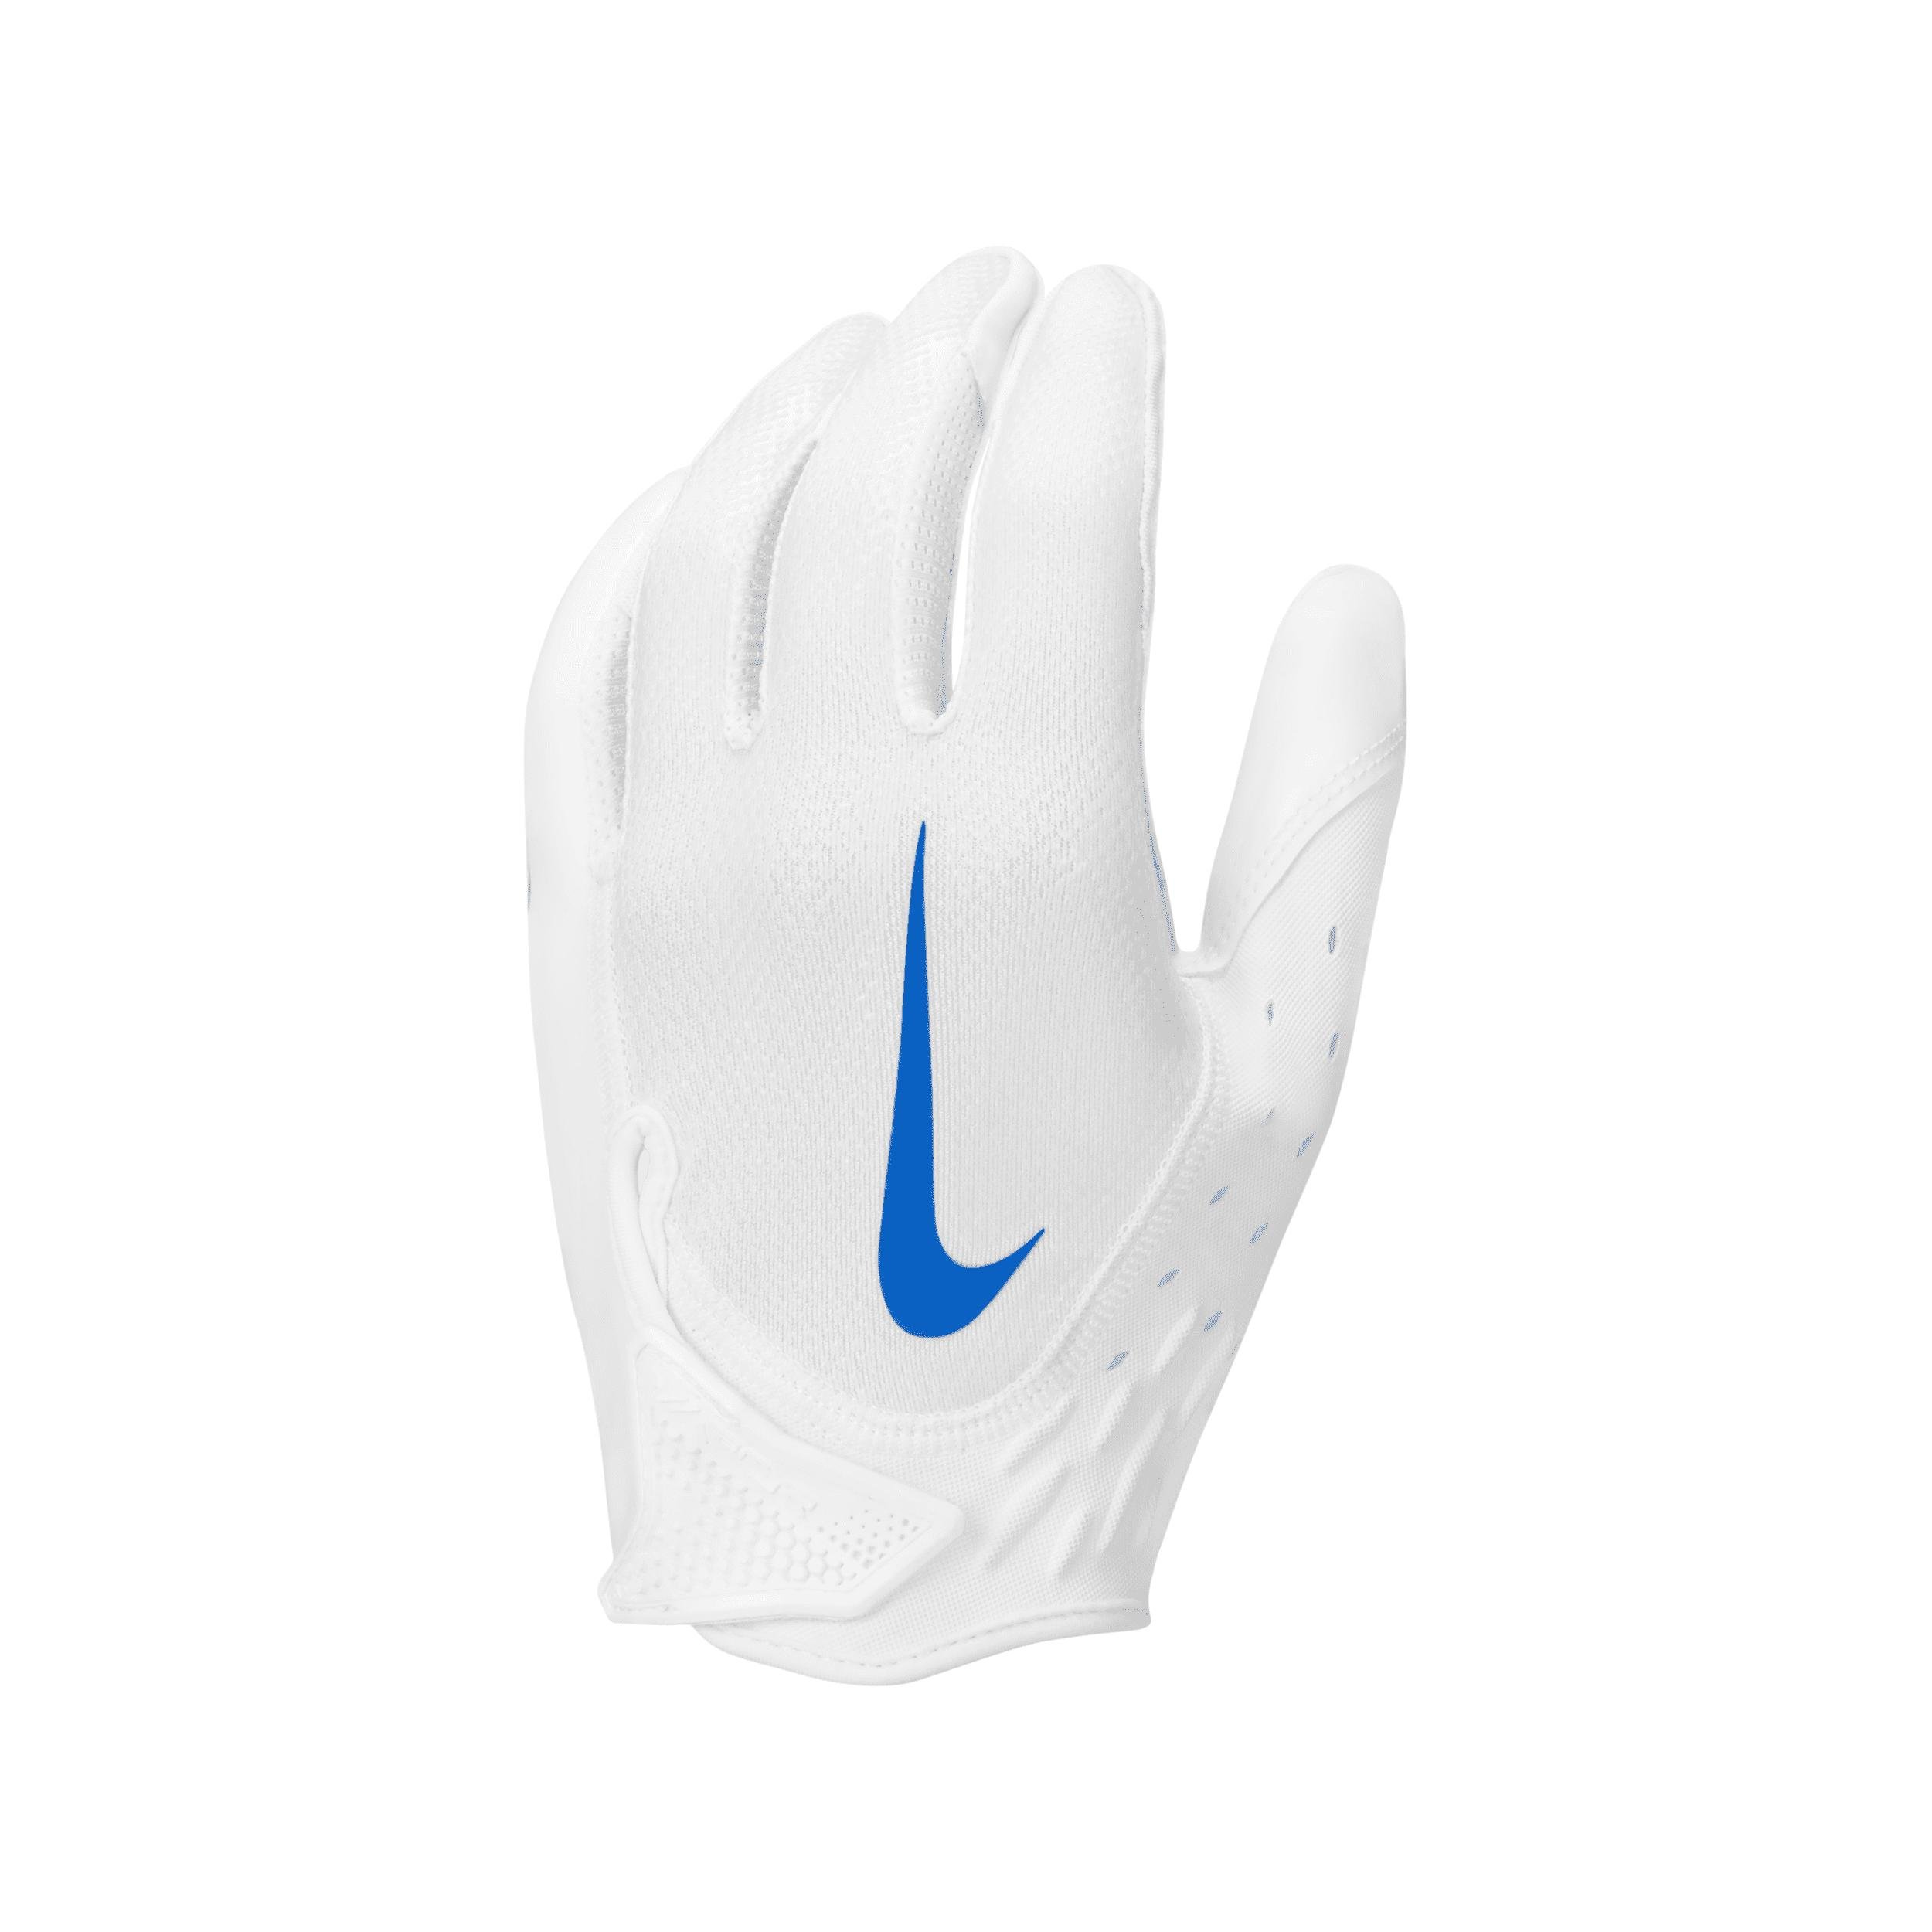 Nike Vapor Jet 7.0 Football Gloves (1 Pair) by NIKE